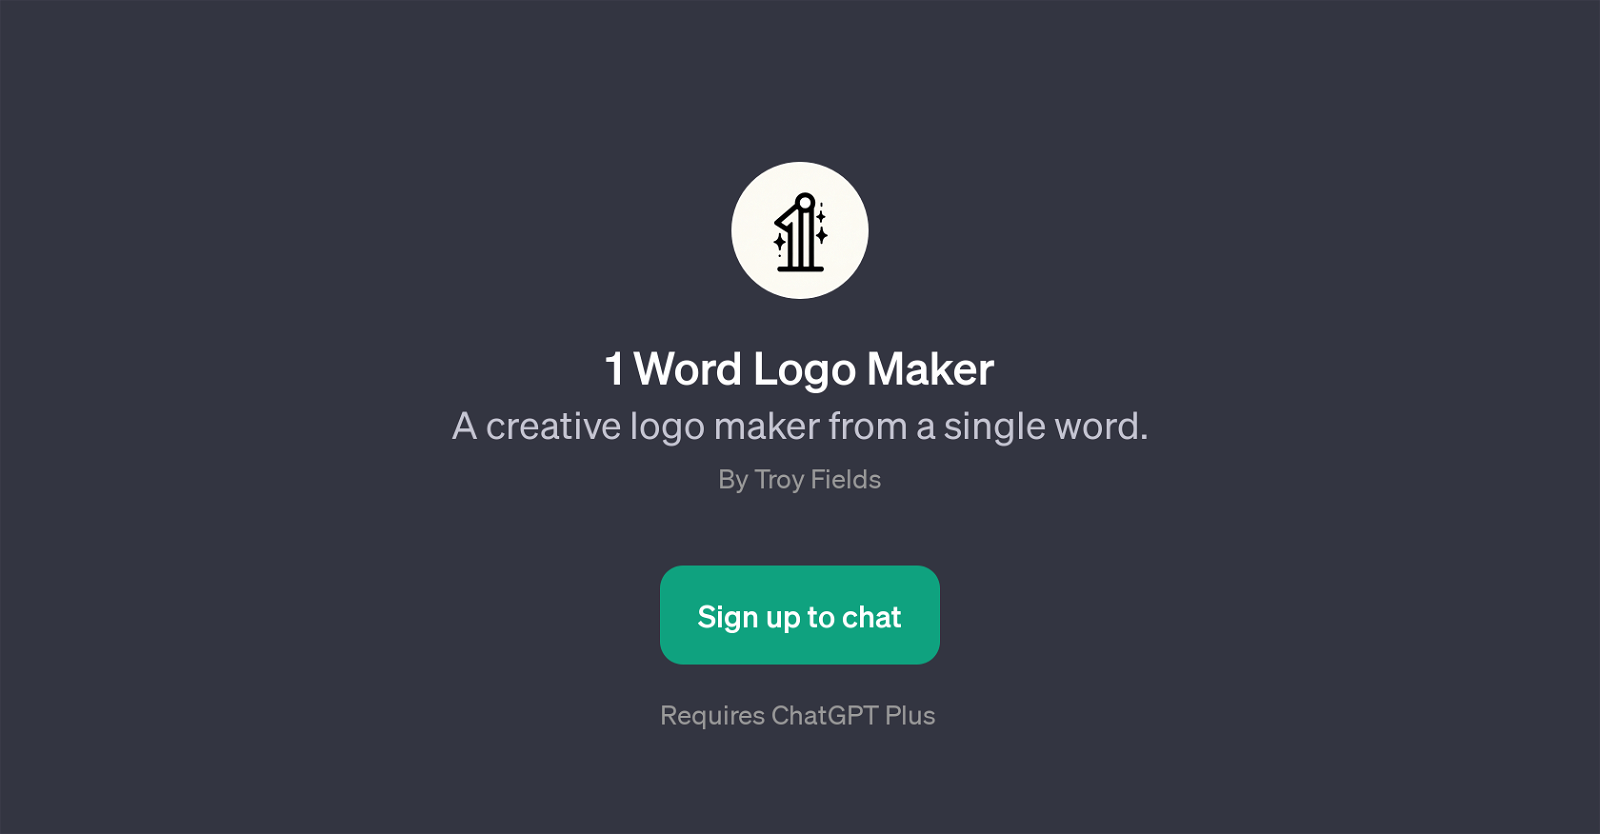 1 Word Logo Maker website